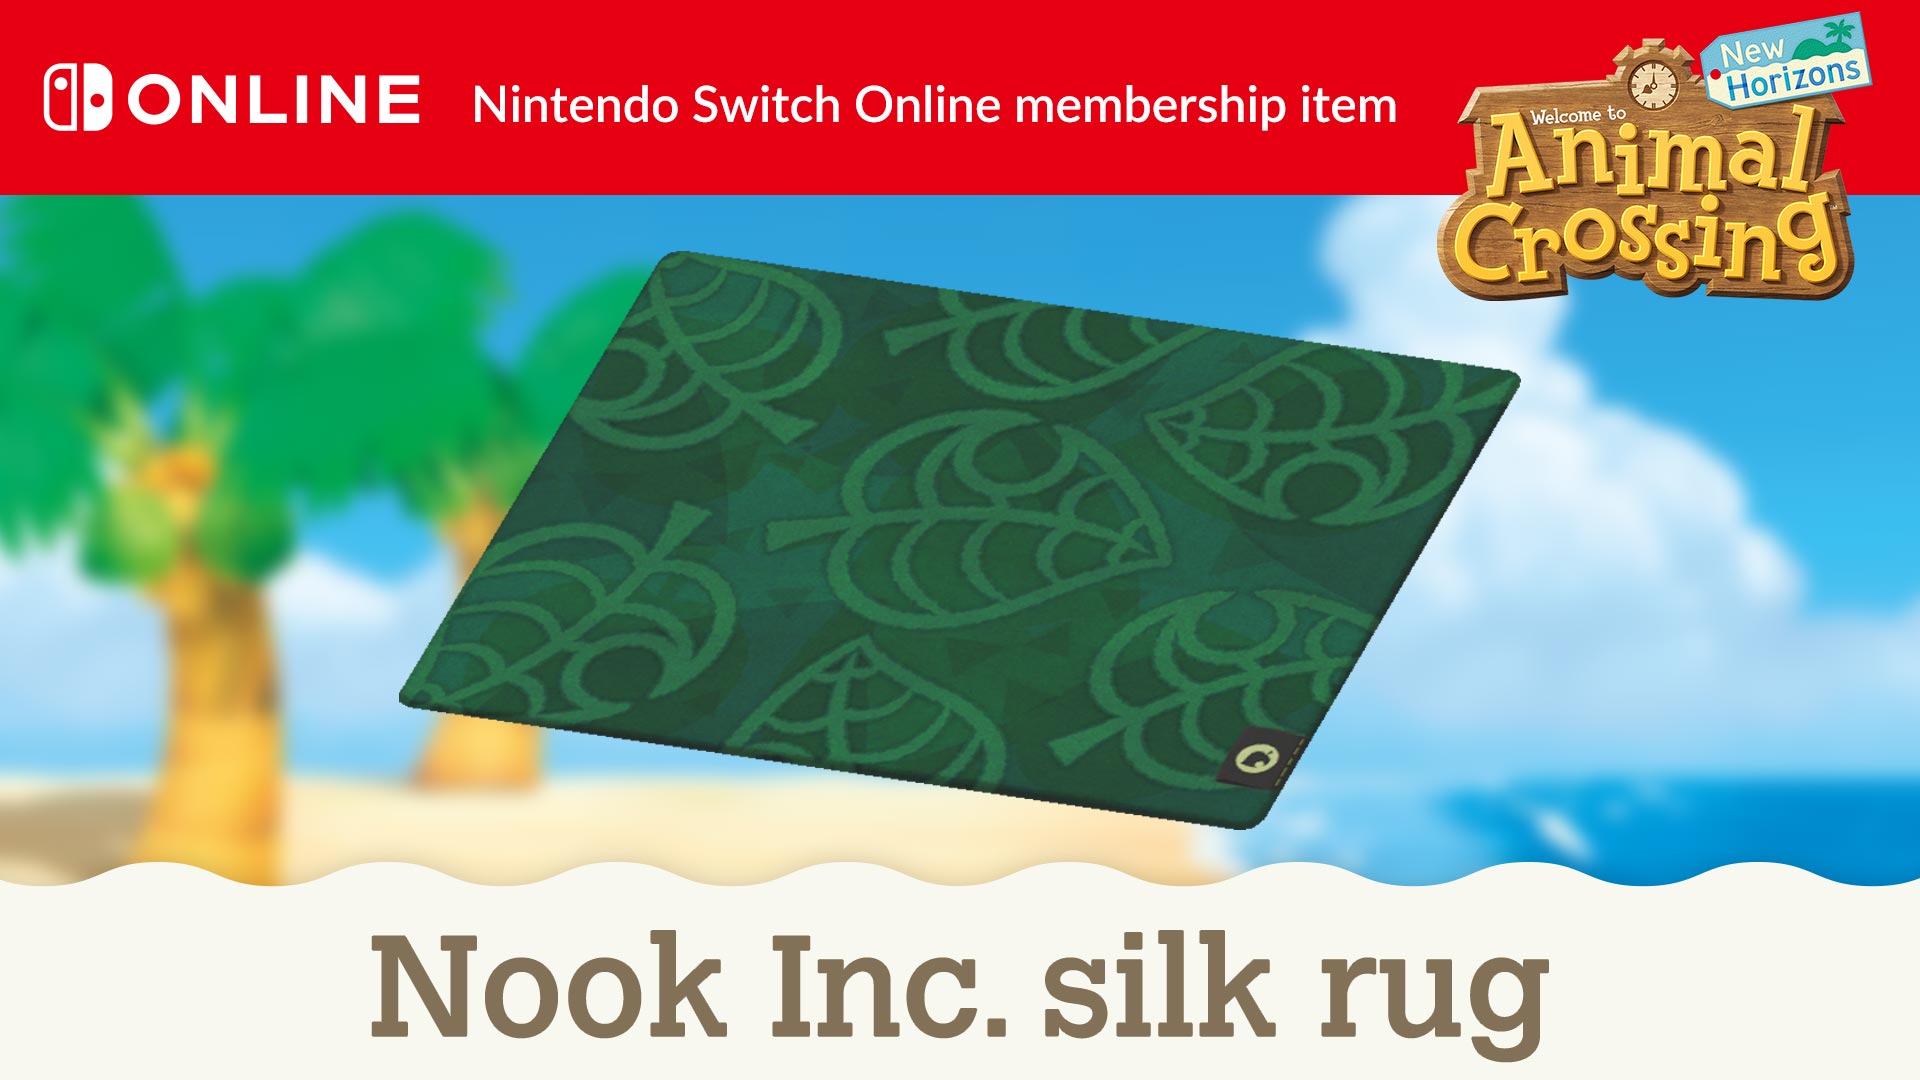 Nook Inc. silk rug